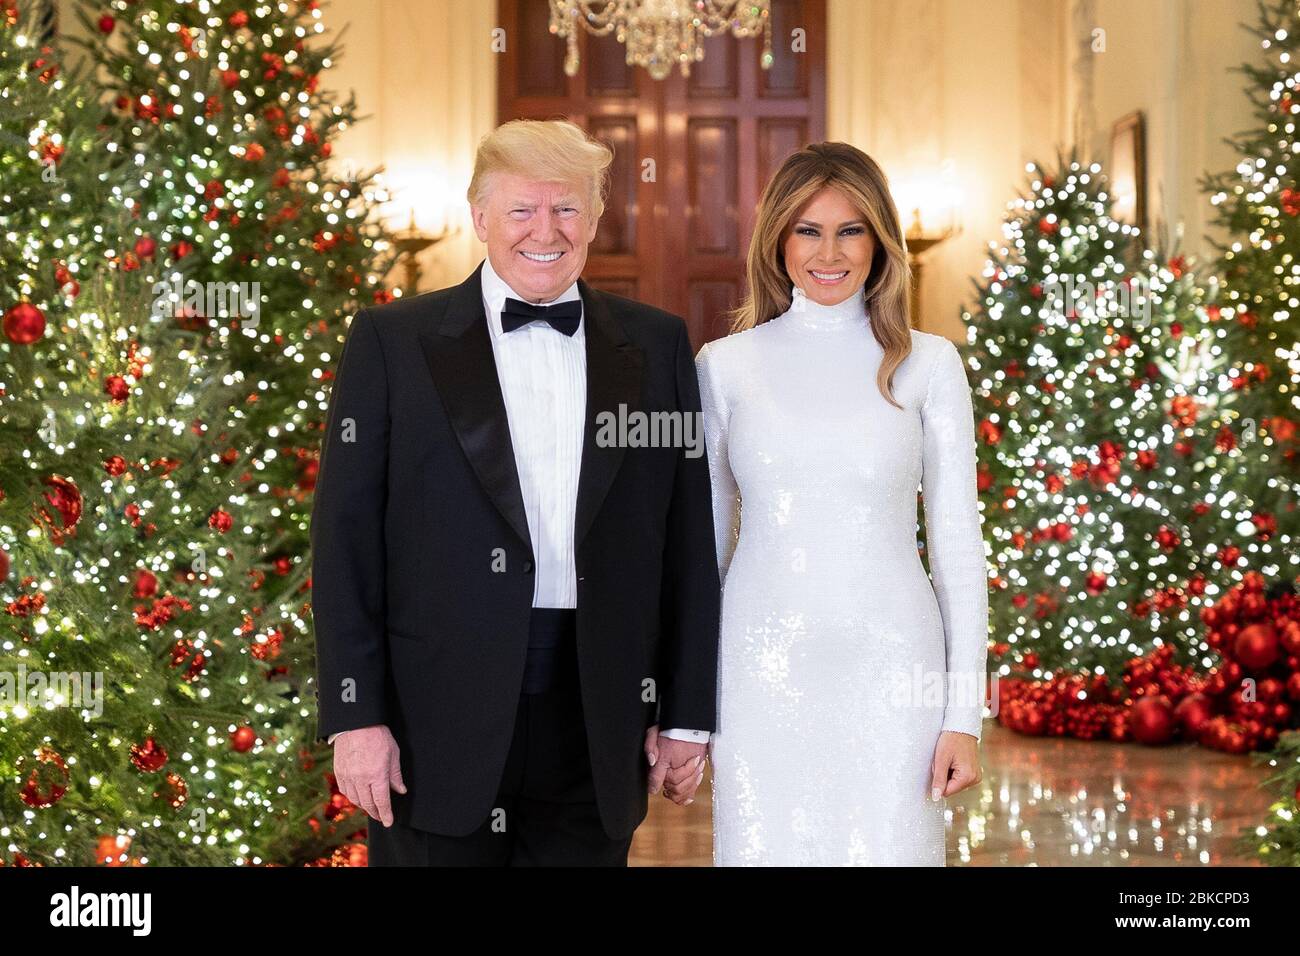 Melania Trump 8x10 Photo Print Official White House Government Portrait Picture